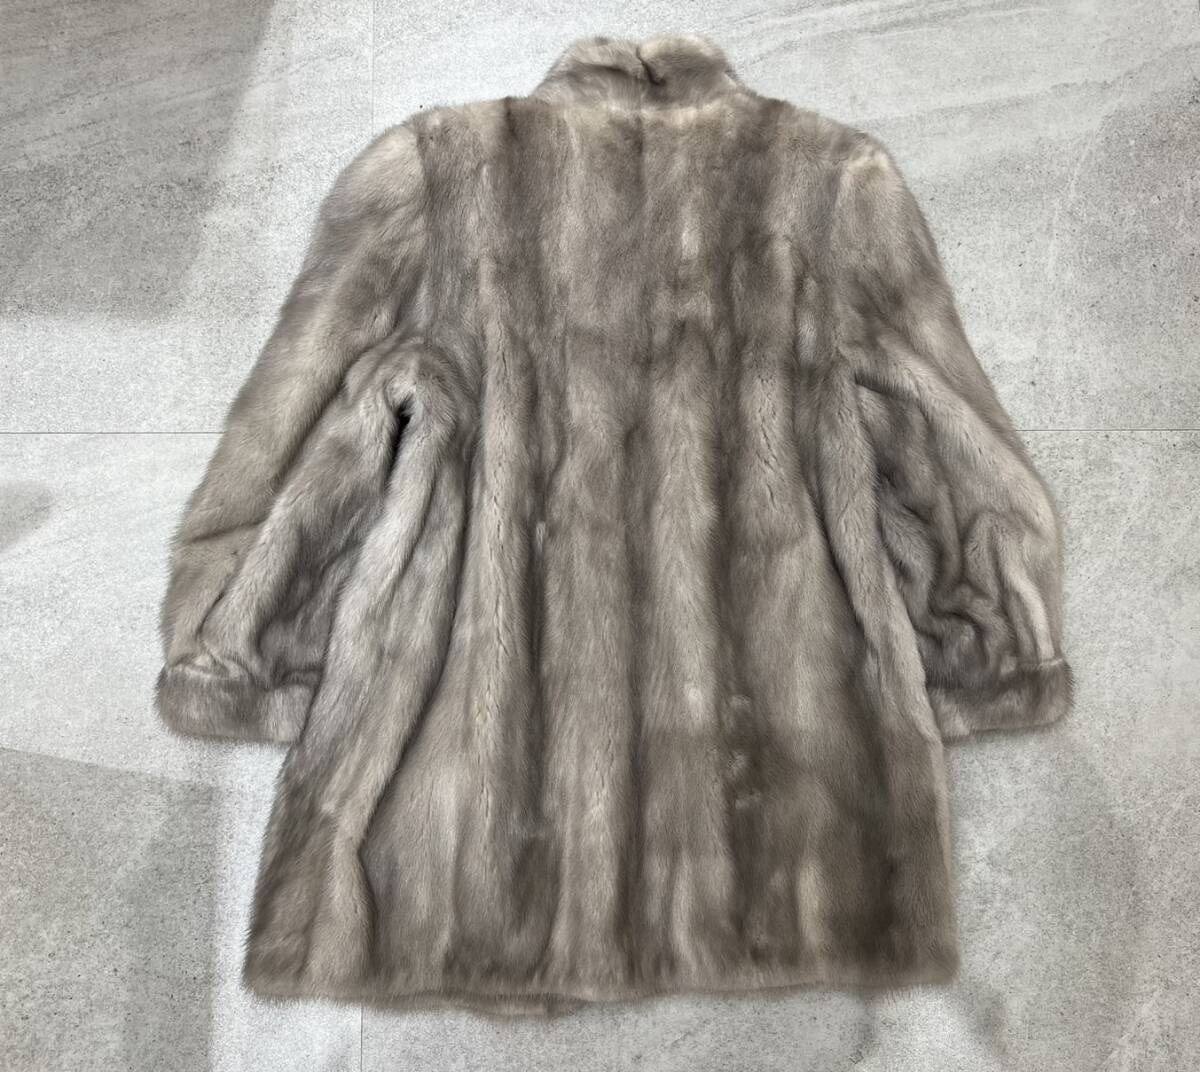 【OMO52YB】ミンクコート ノーブランド 高級 毛皮 グレー系 着丈約82cm レディース 婦人用 防寒 アウター ファッション 中古 長期保管品の画像2